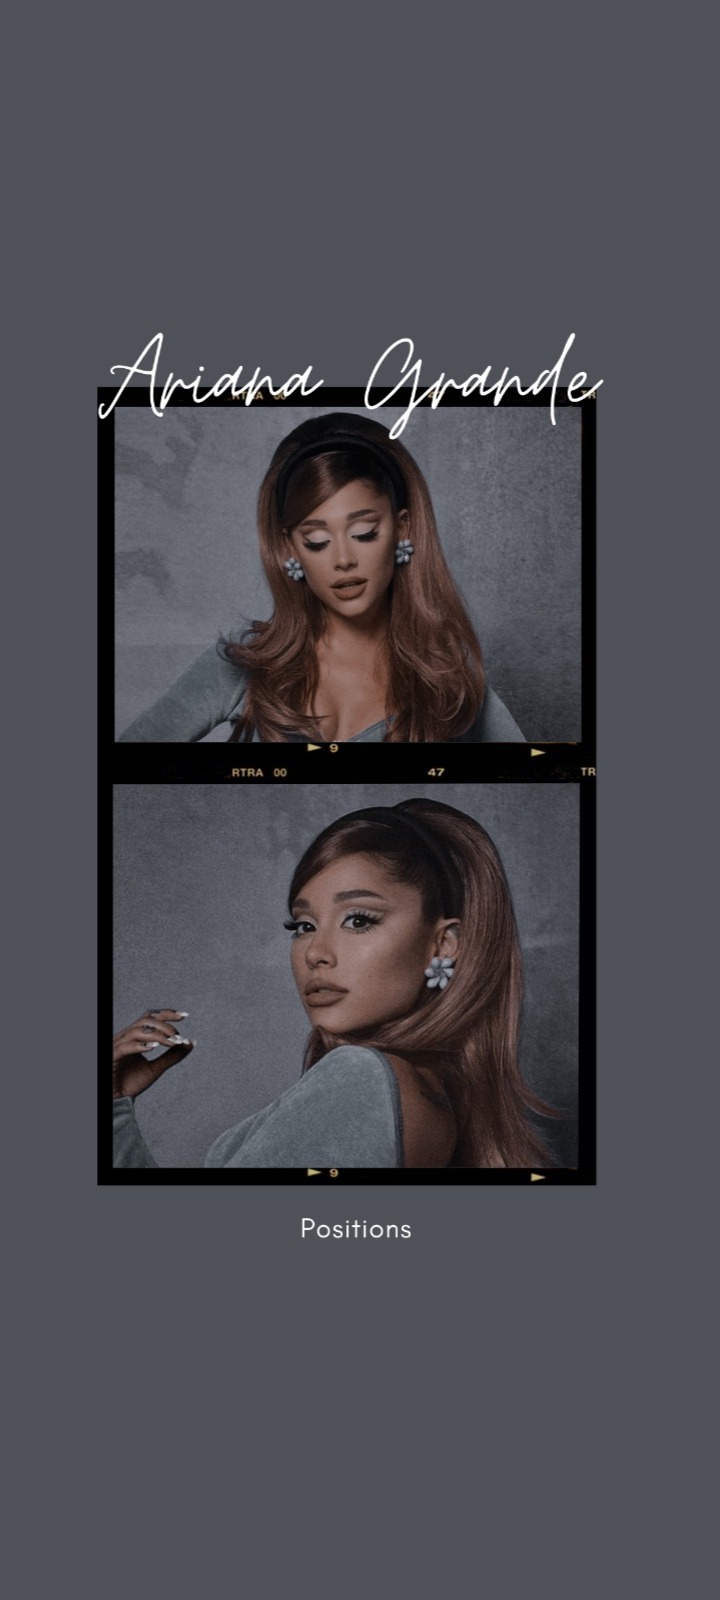 Aesthetic Ariana Grande Wallpapers